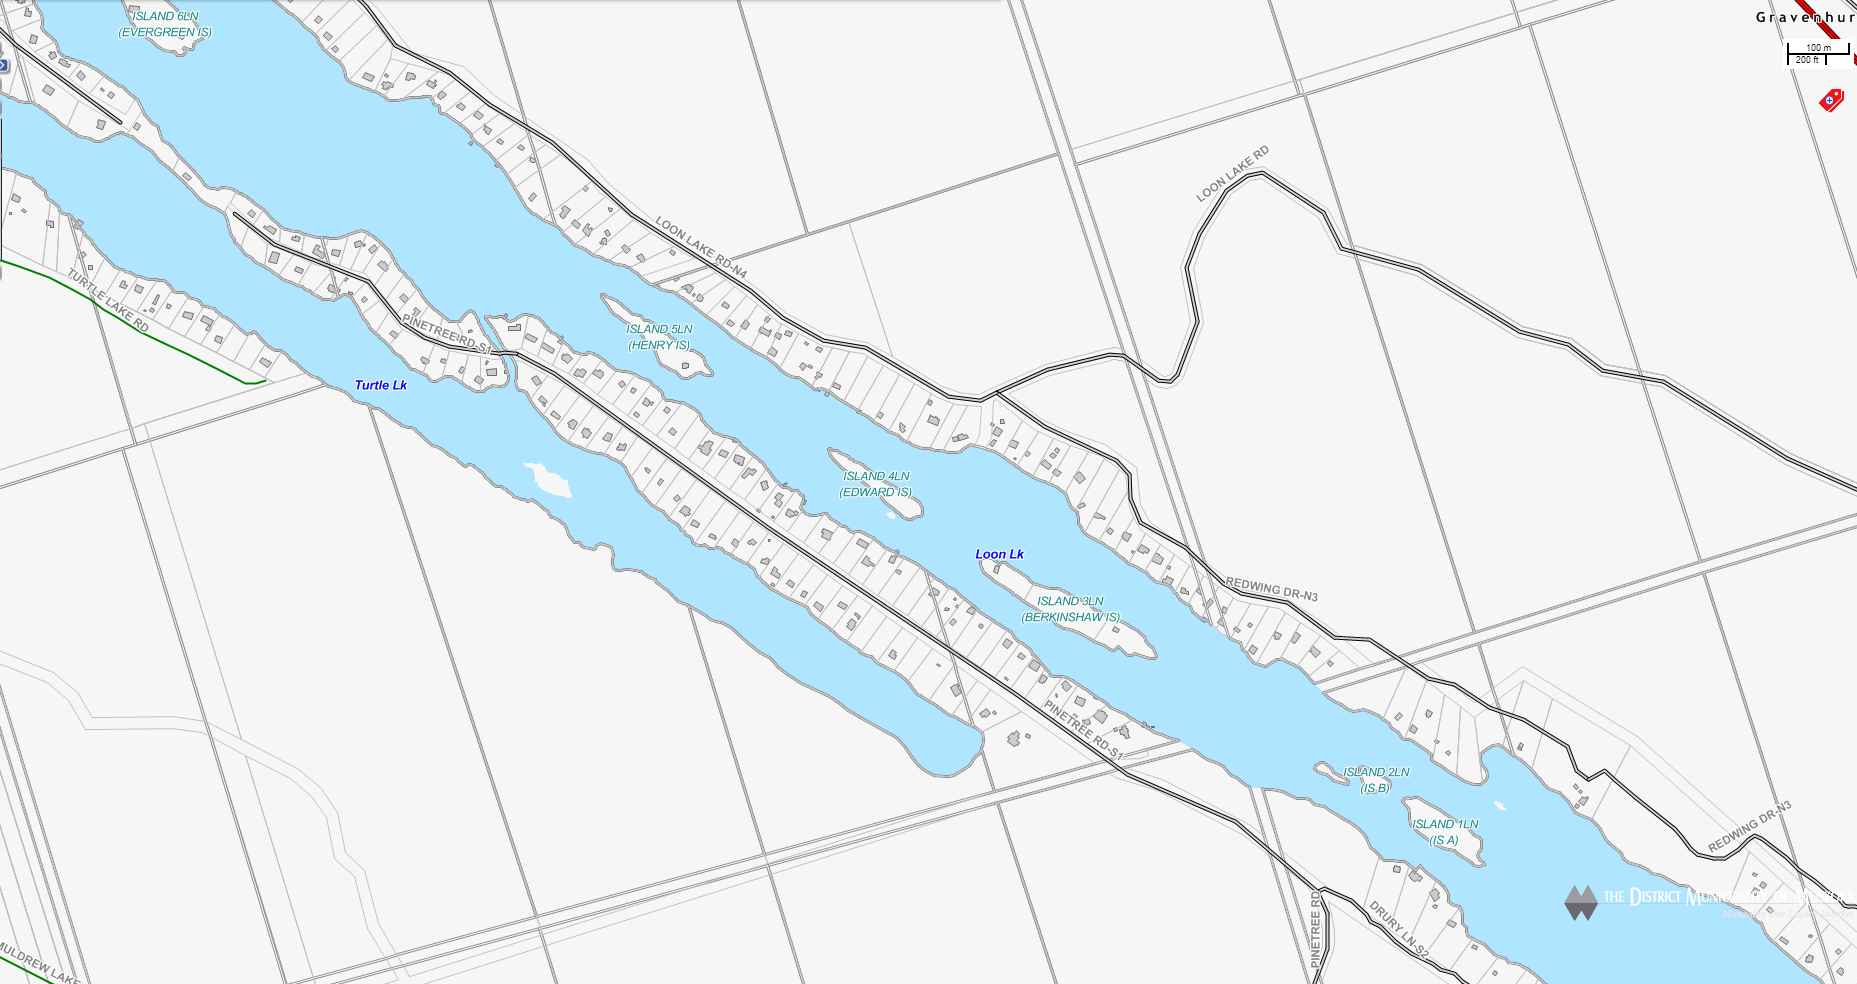 Fawn Lake Cadastral Map - Fawn Lake - Muskoka